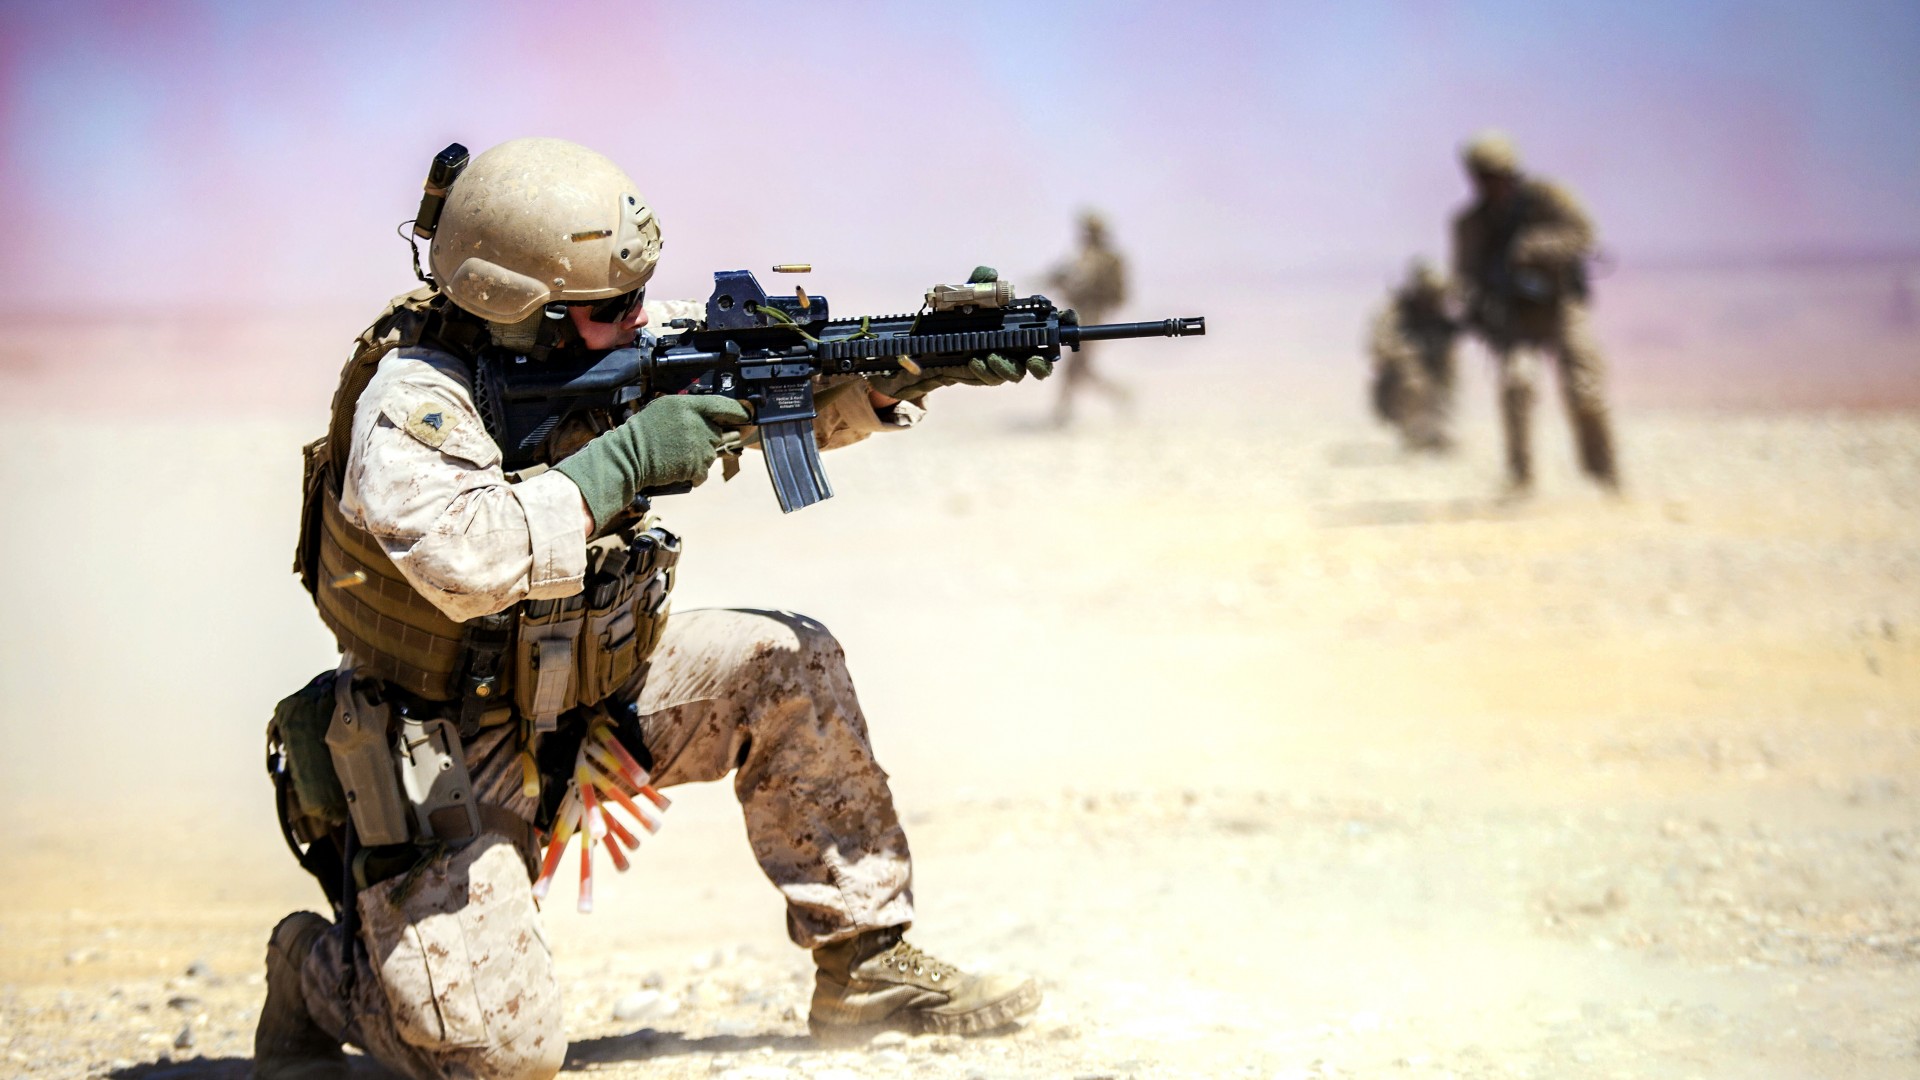 M4, carbine, assault rifle, U.S. Army, soldier, Iraqi, desert, firing (horizontal)